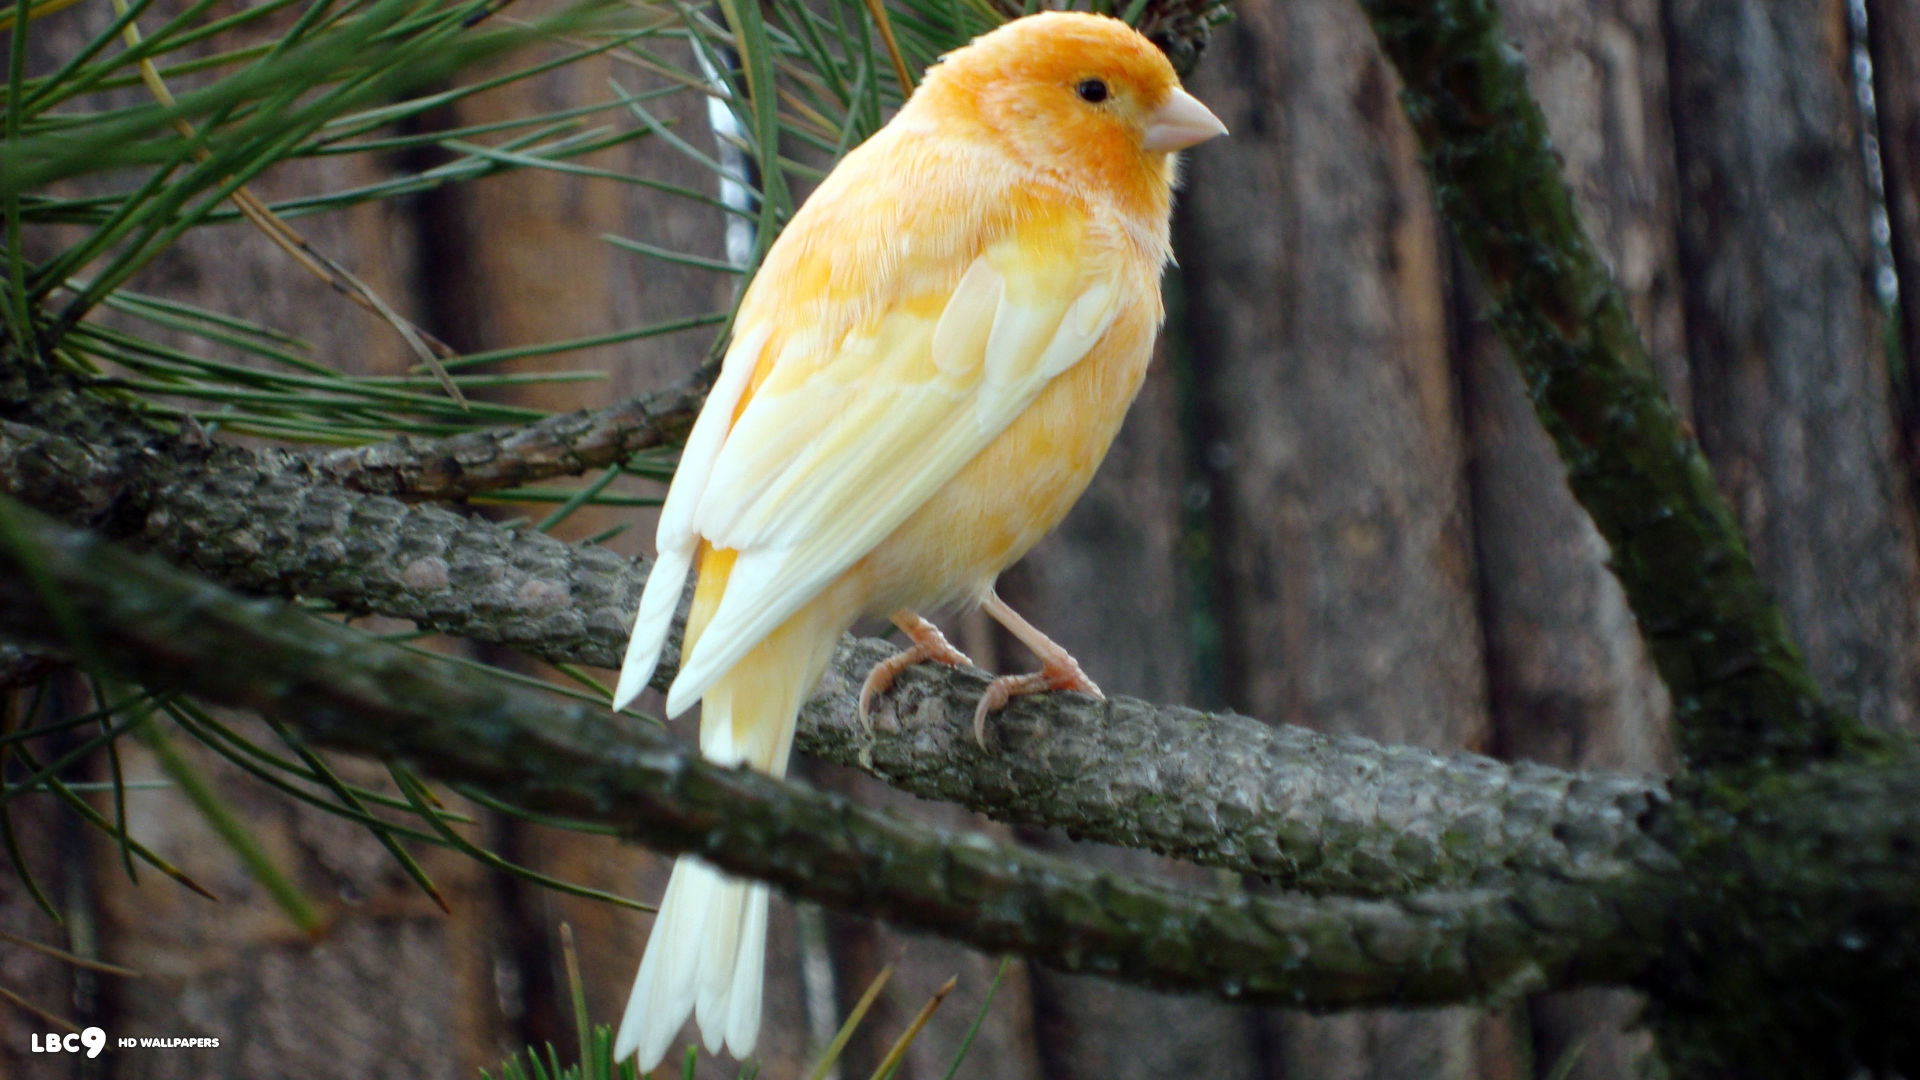 Free Canary Bird Photos and Vectors